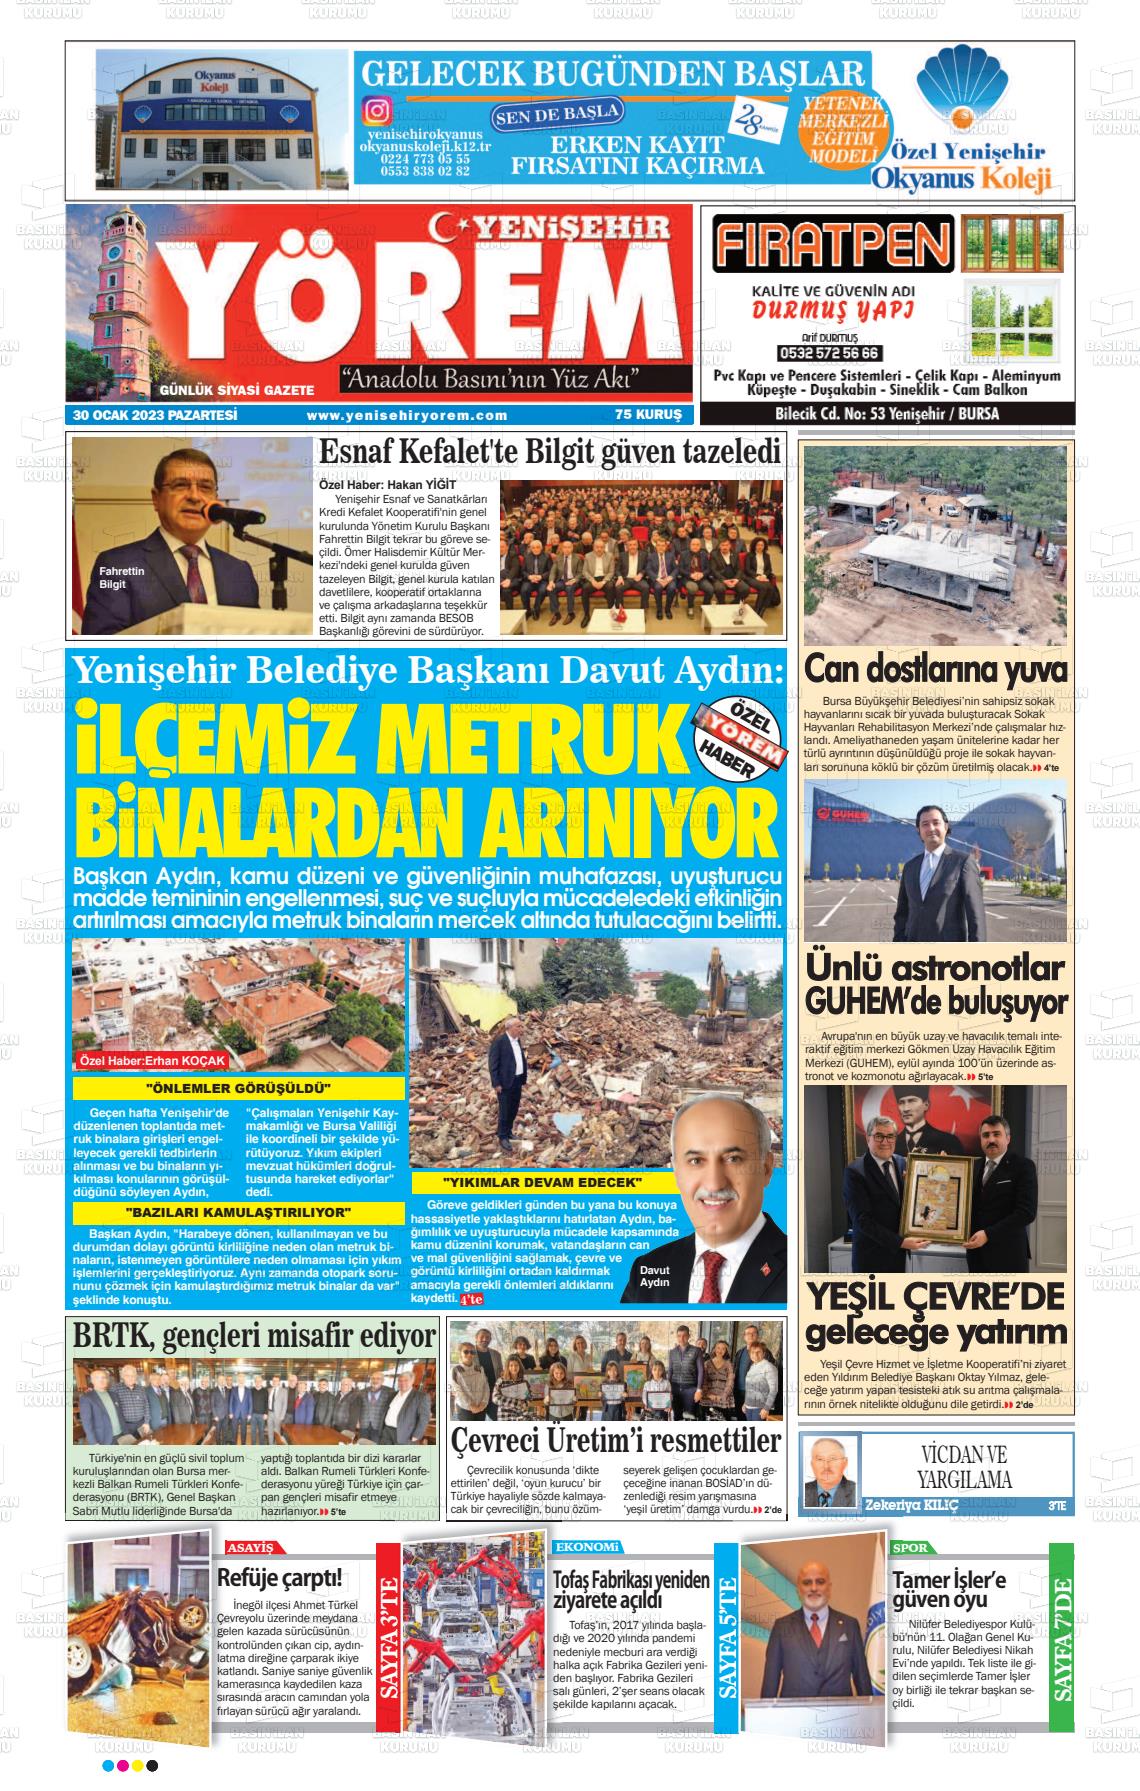 30 Ocak 2023 Yenişehir Yörem Gazete Manşeti